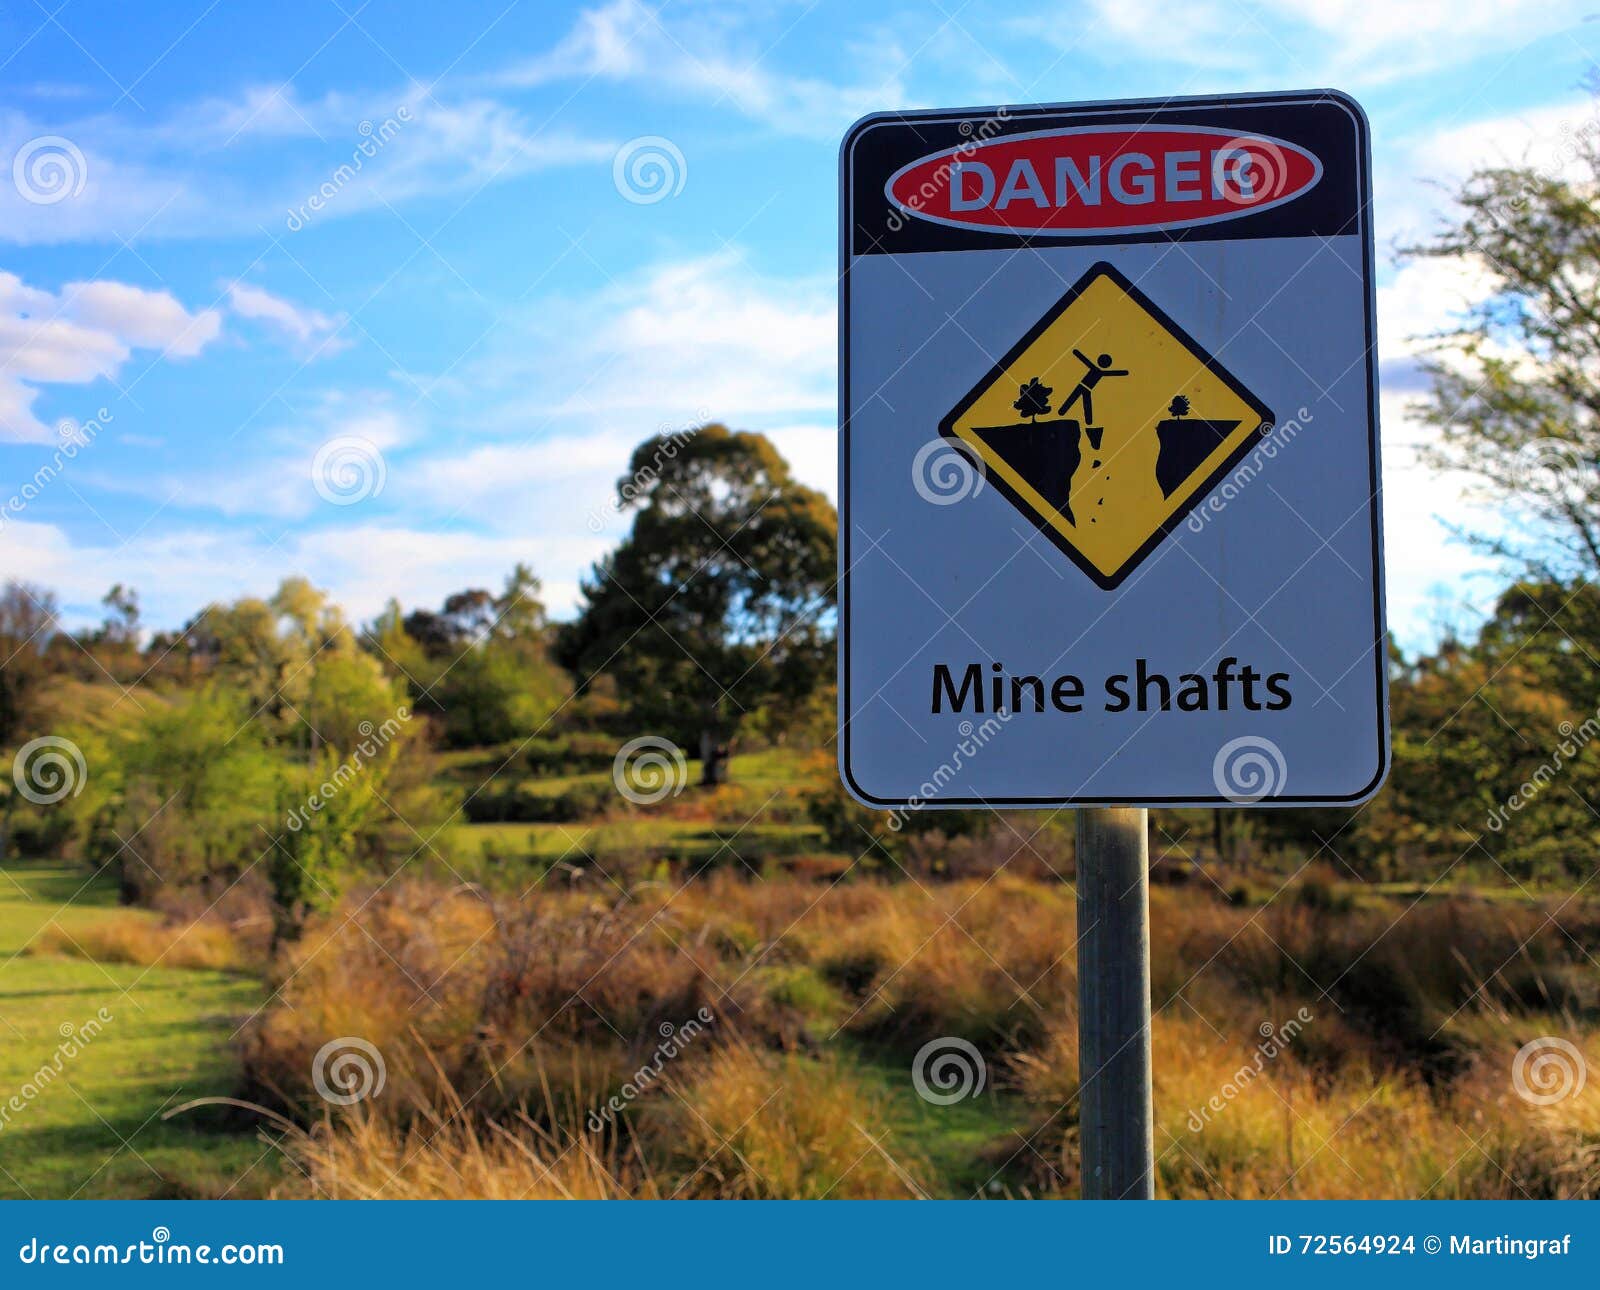 mine shafts danger sign in australian gold-mining countryside